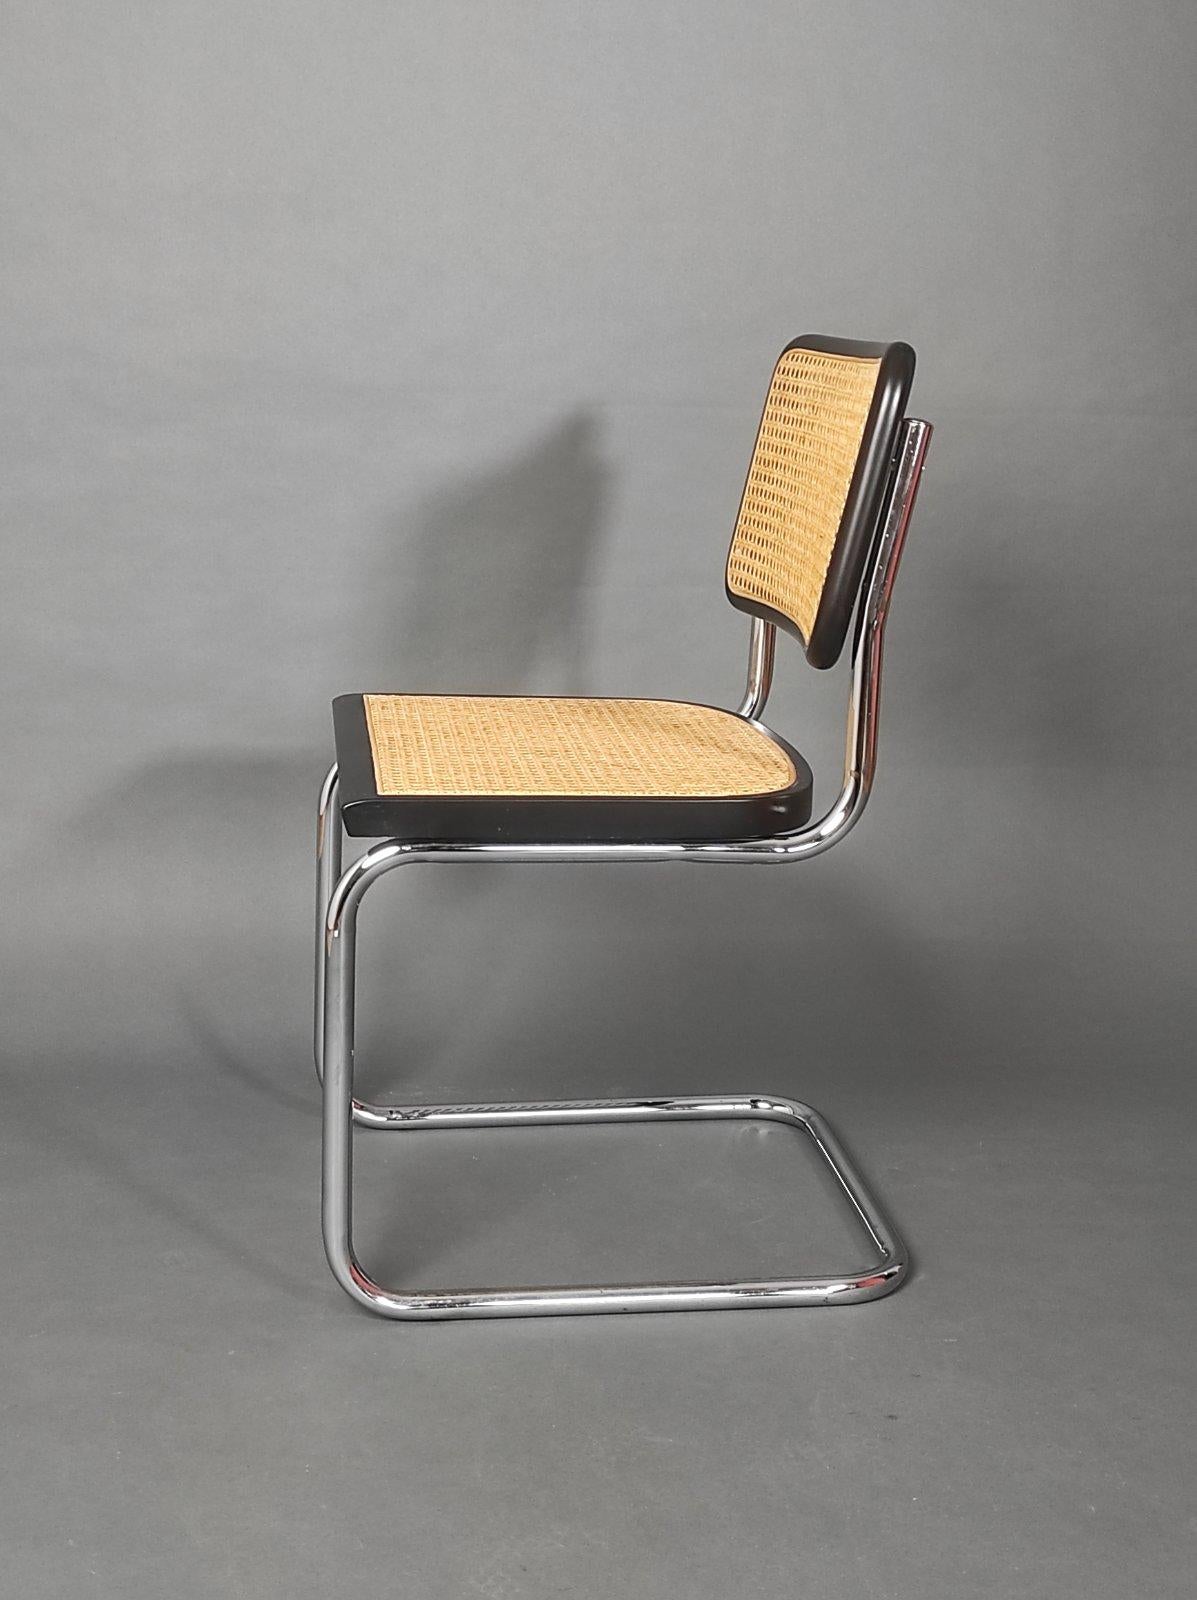 Cane Marcel Breuer Cesca Chair Italy 1970s For Sale